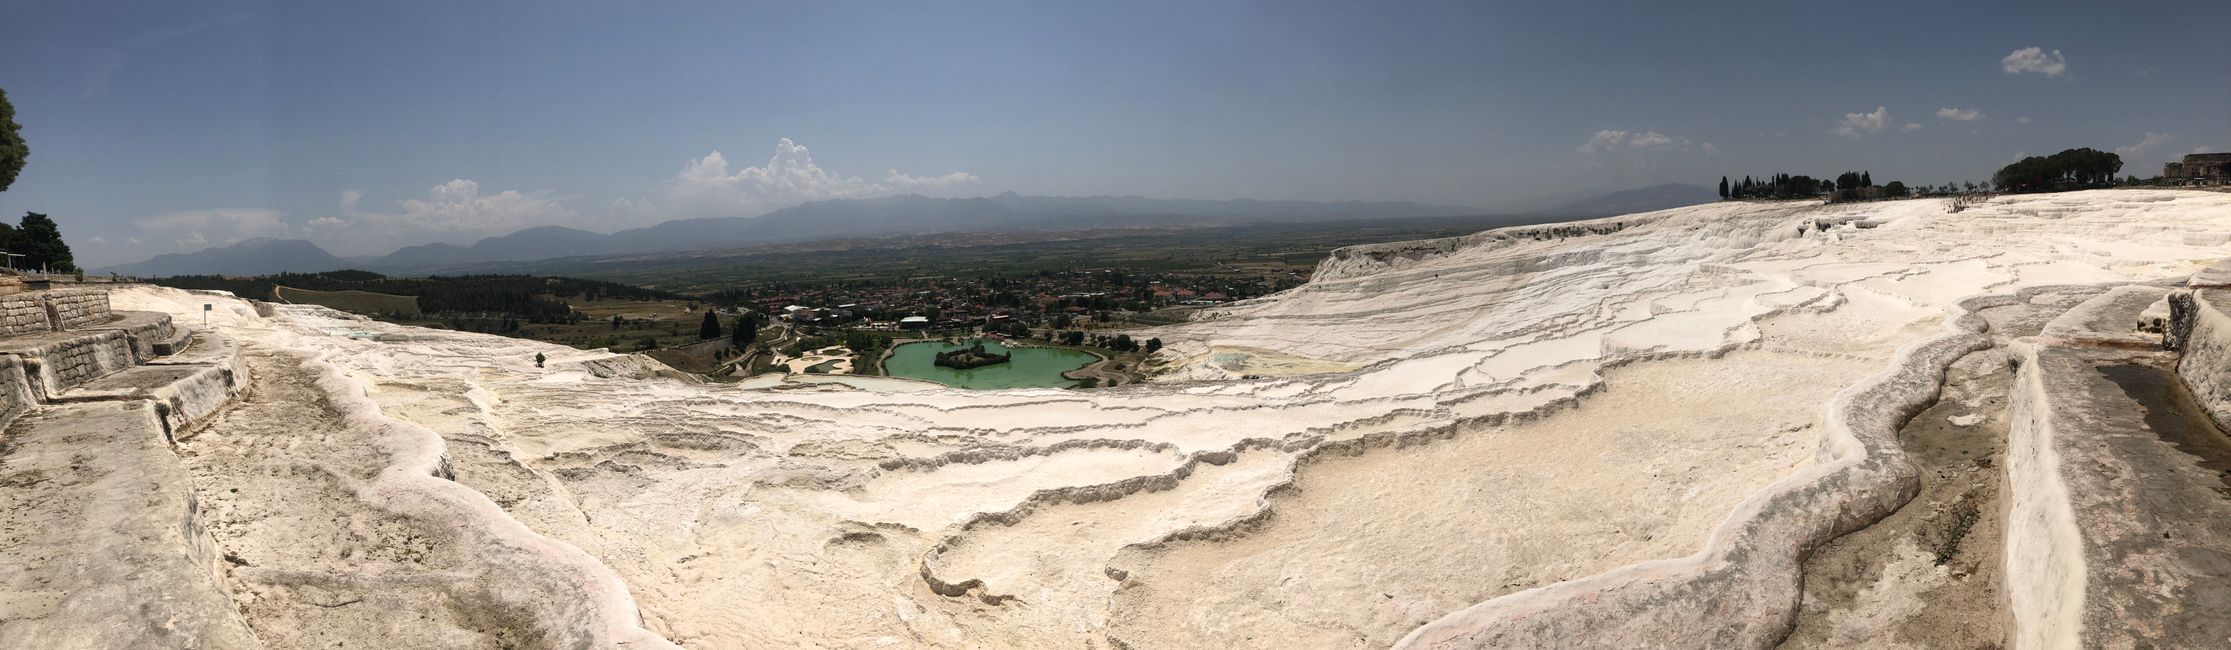 The travertine terraces of Pamukkale ♥️